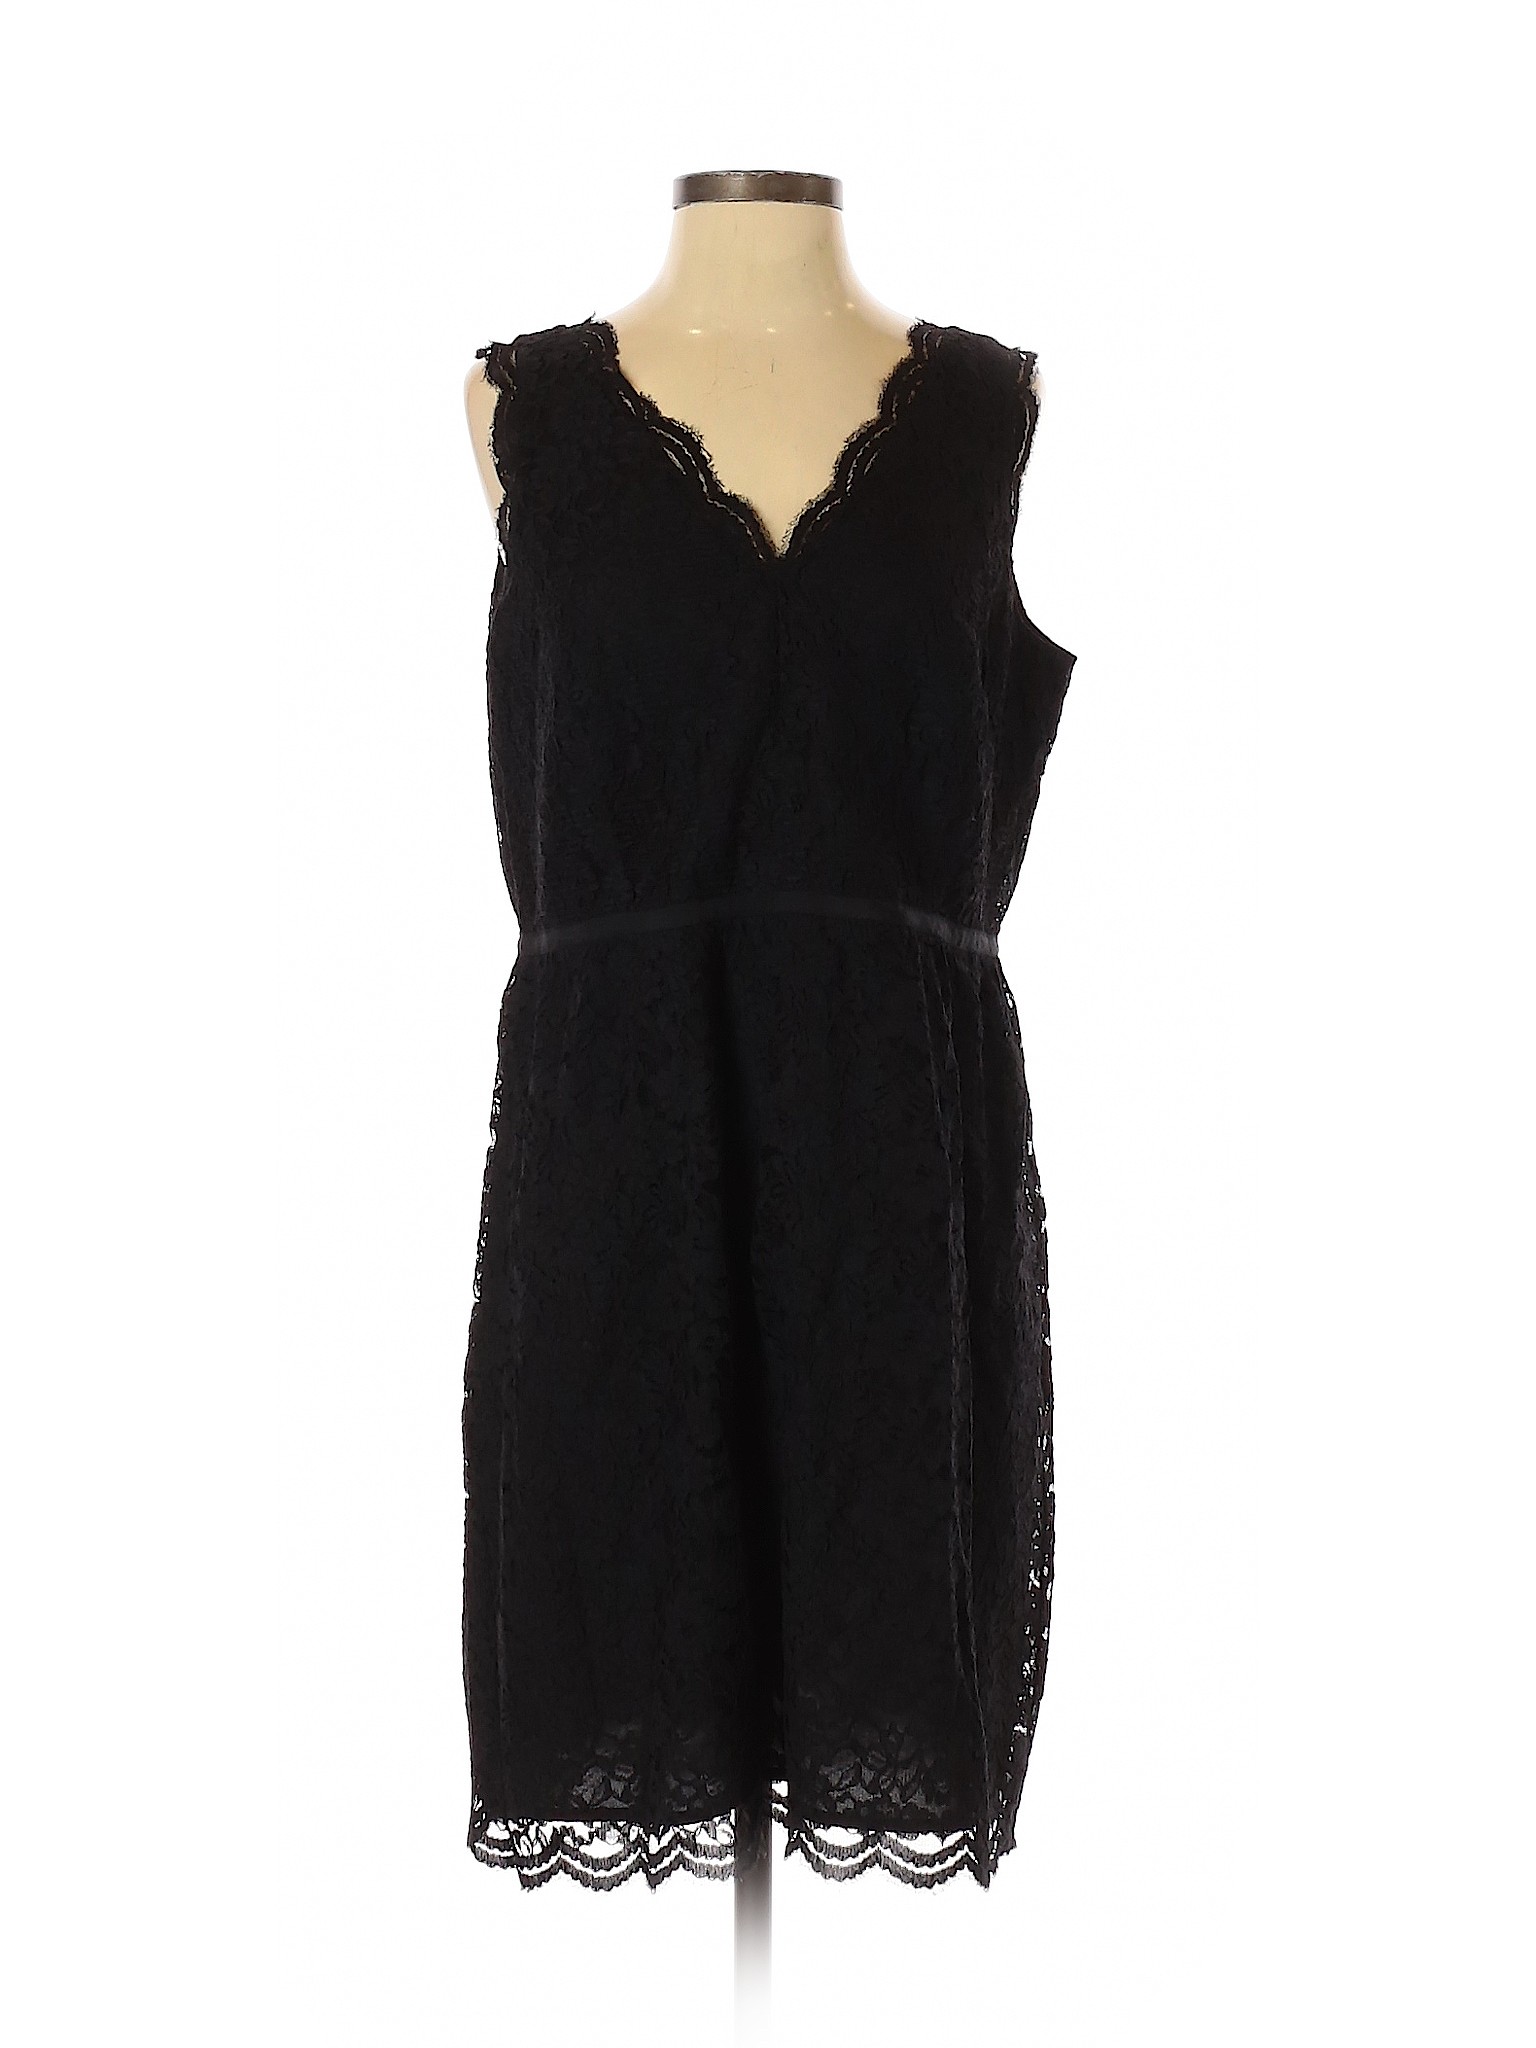 Ann Taylor LOFT Women Black Cocktail Dress 12 Petites | eBay